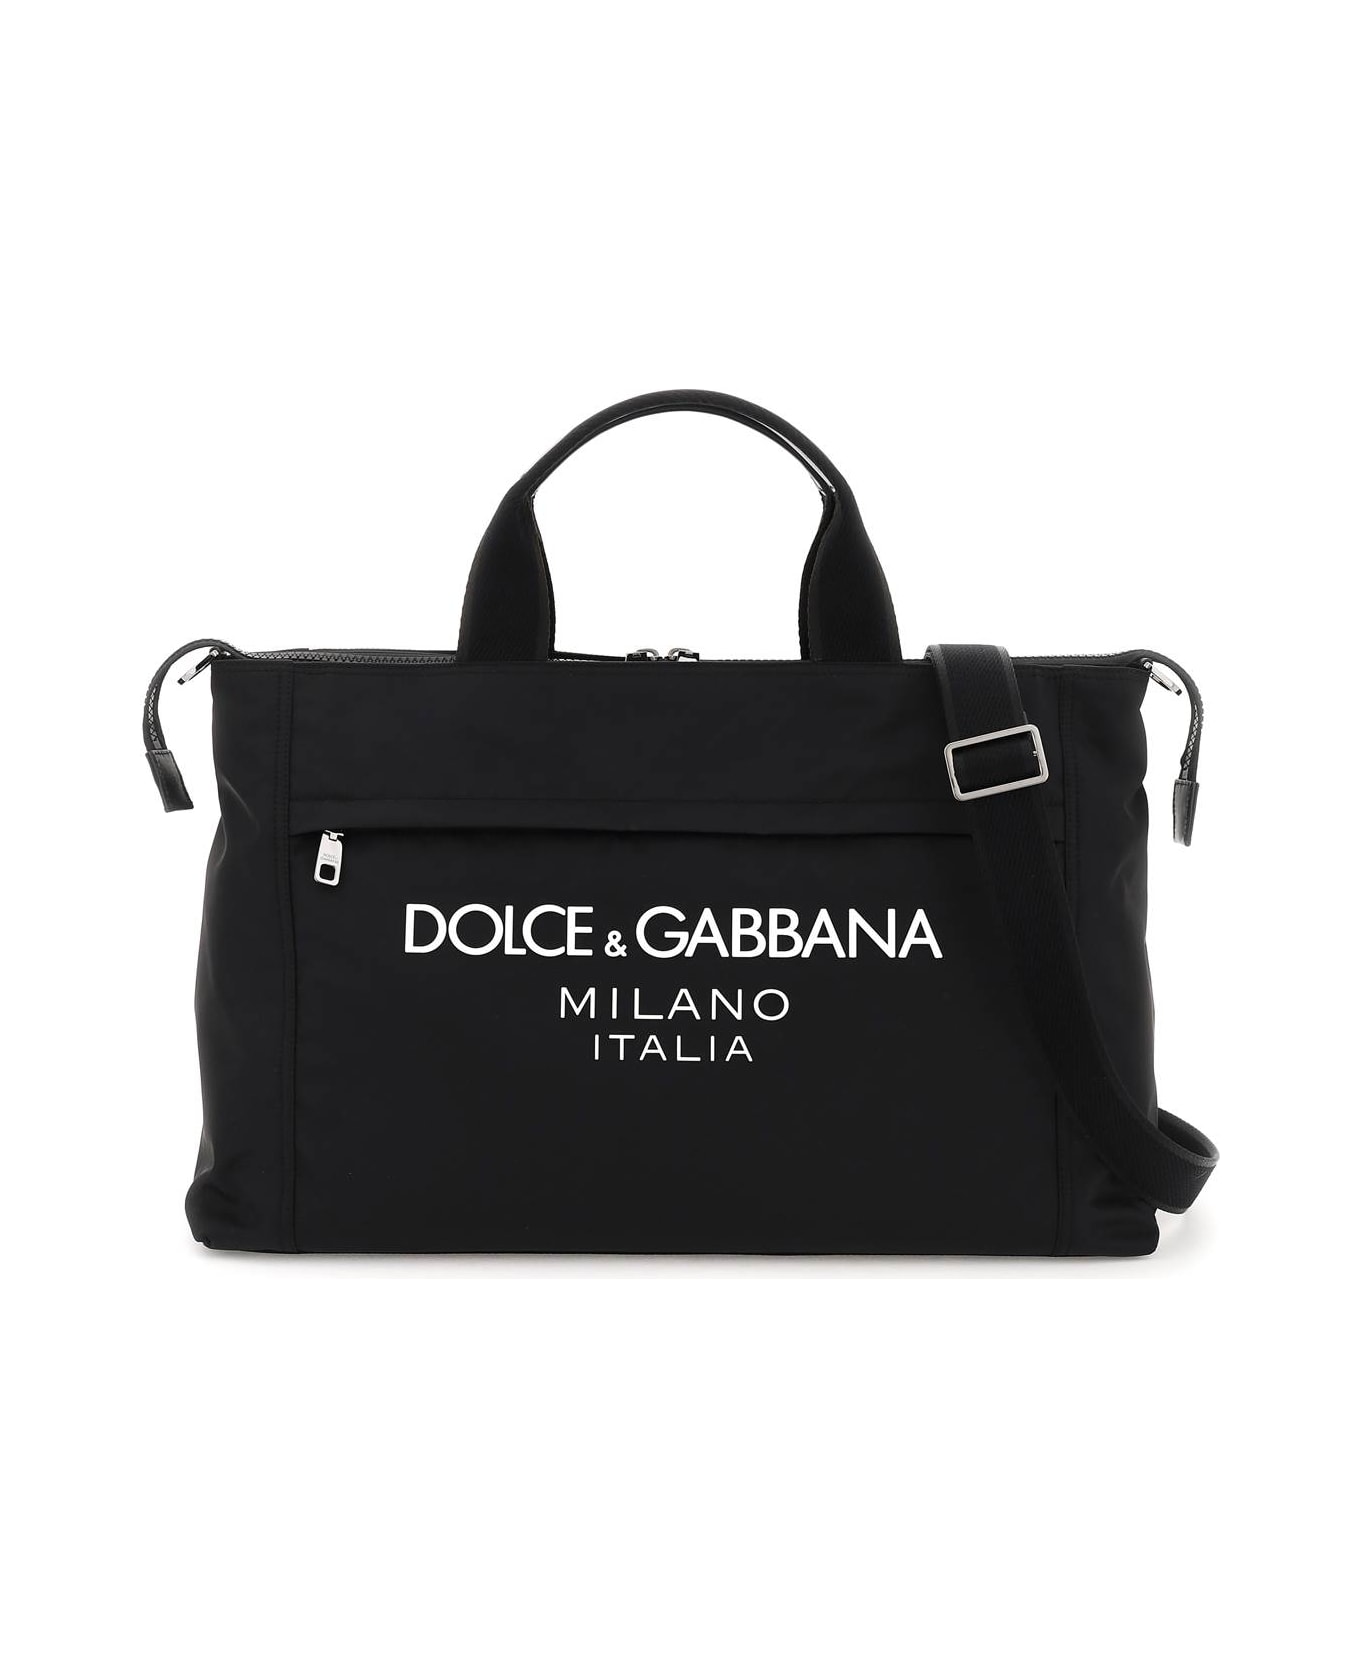 Dolce & Gabbana Nylon Duffle Bag With Logo - Nero/nero トートバッグ